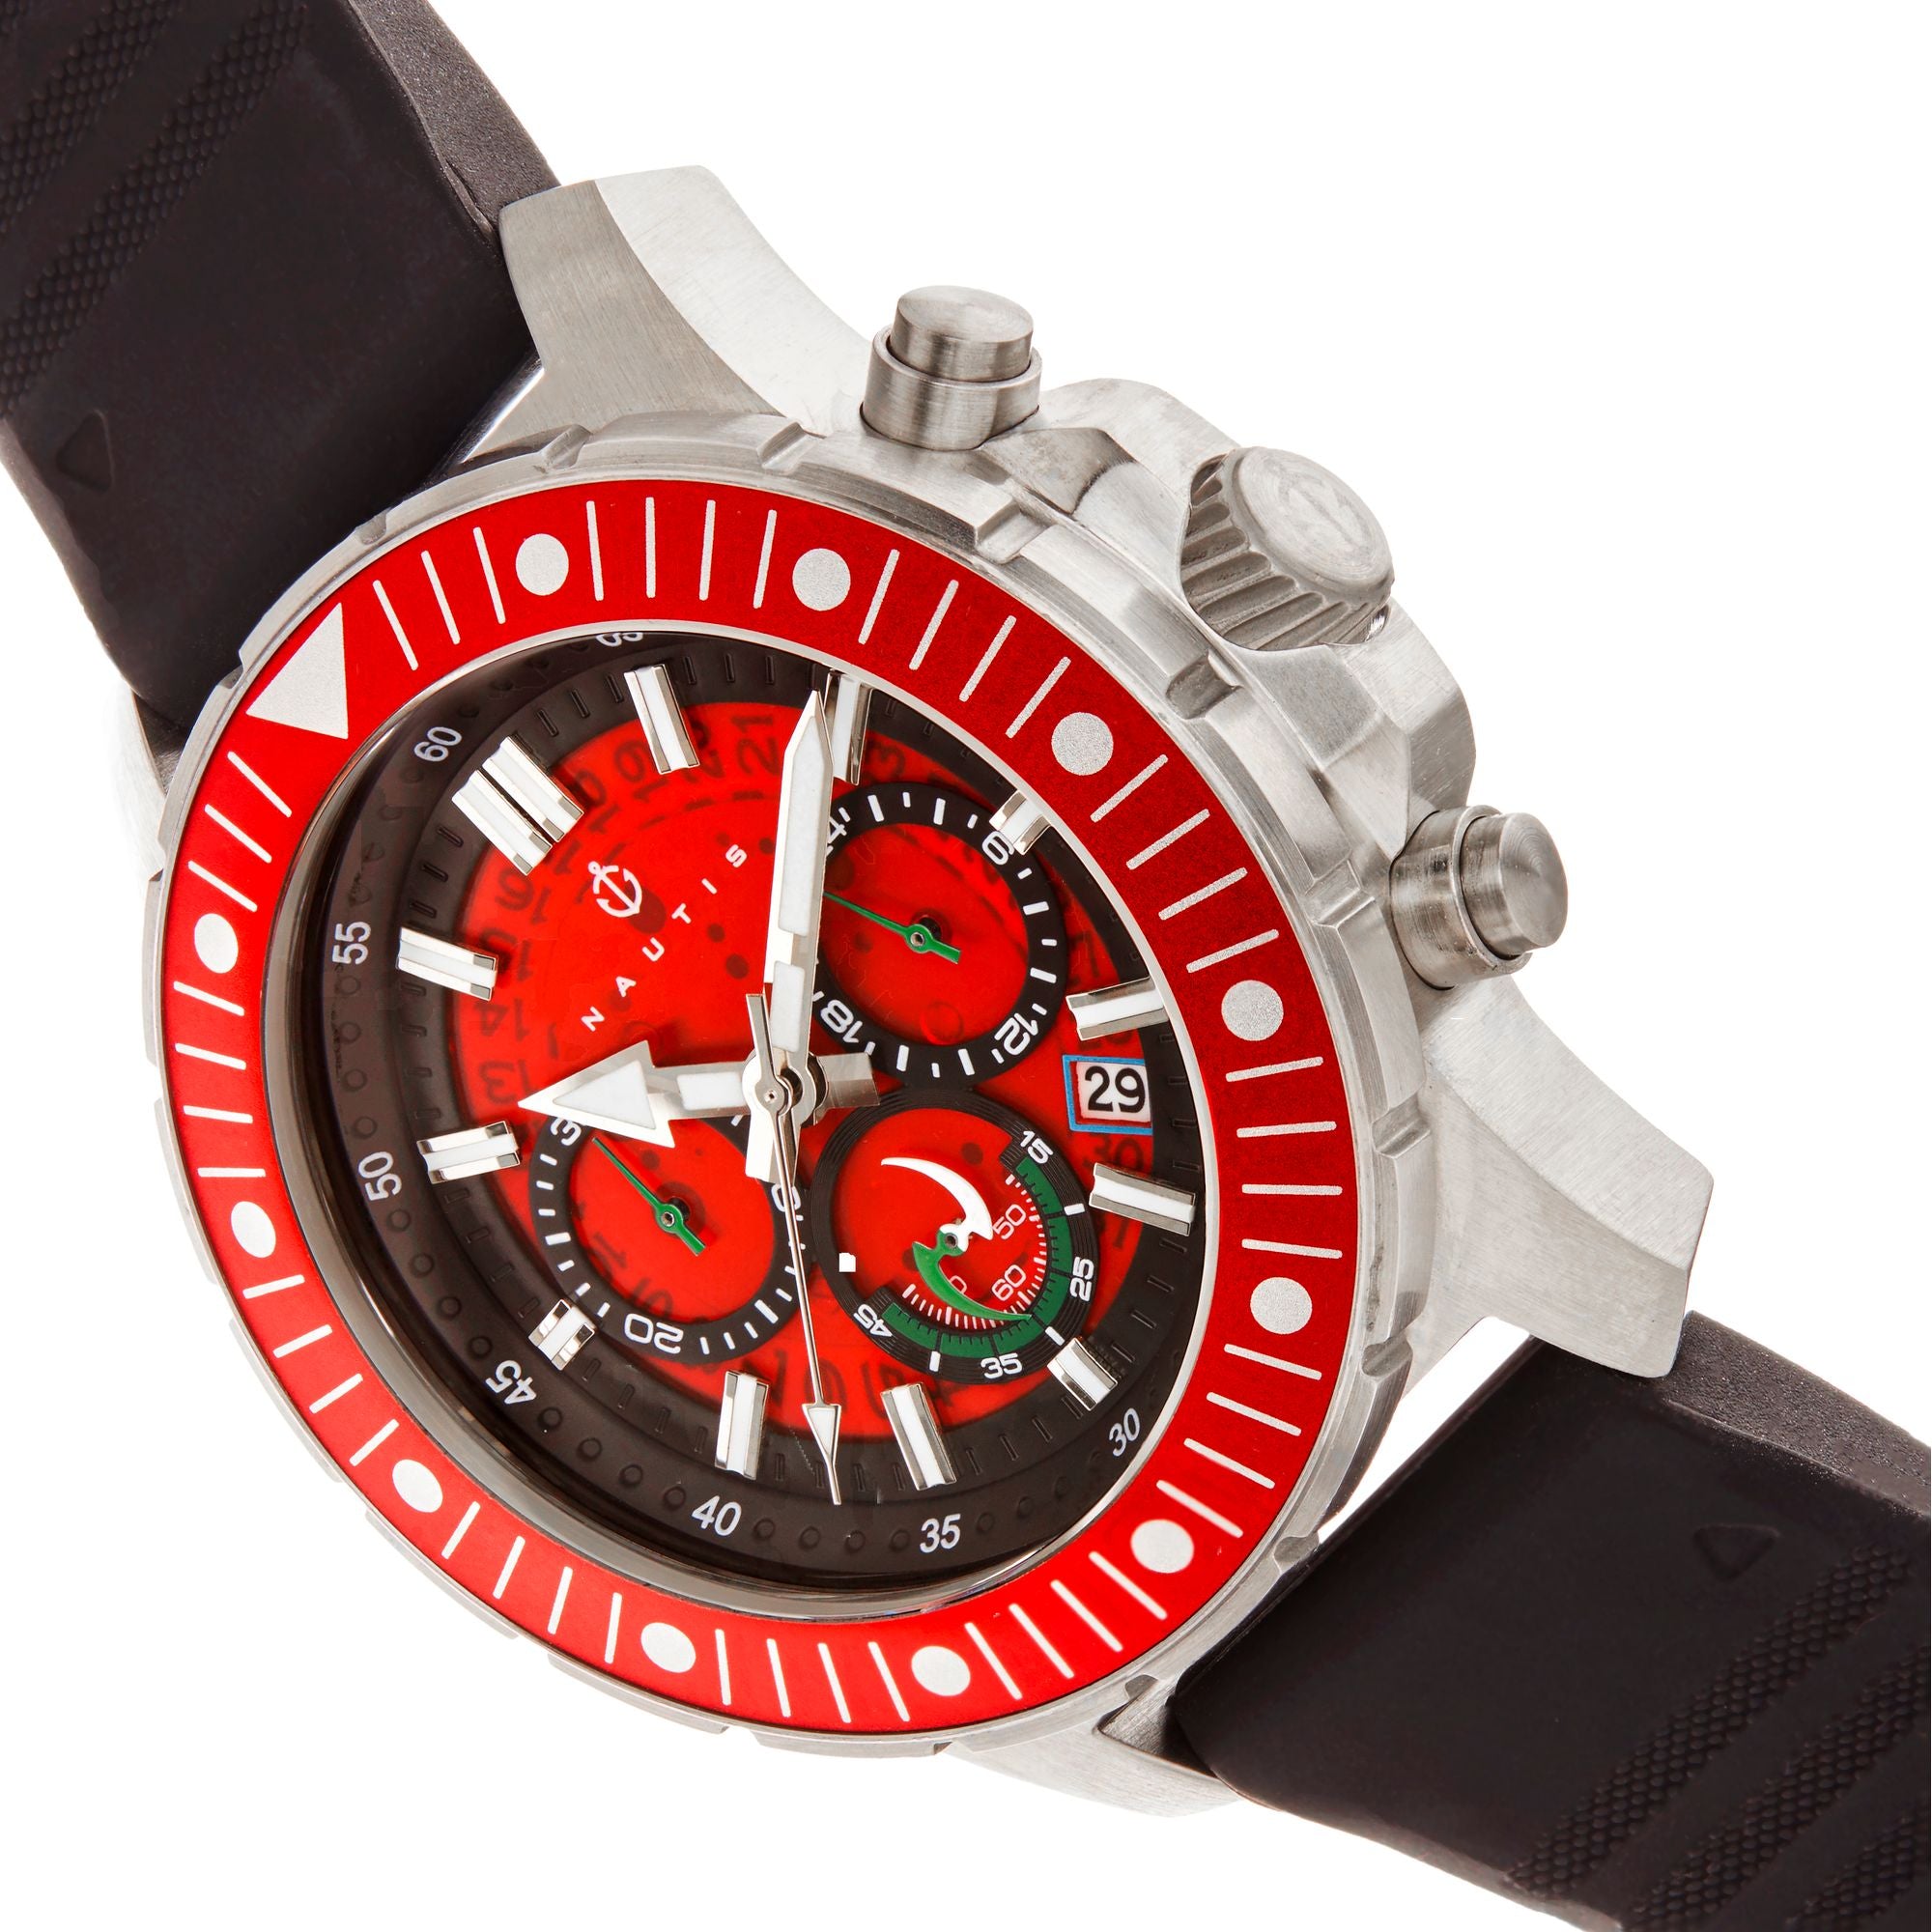 Nautis Caspian Chronograph Strap Watch w/Date - Black/Red - 21227G-D